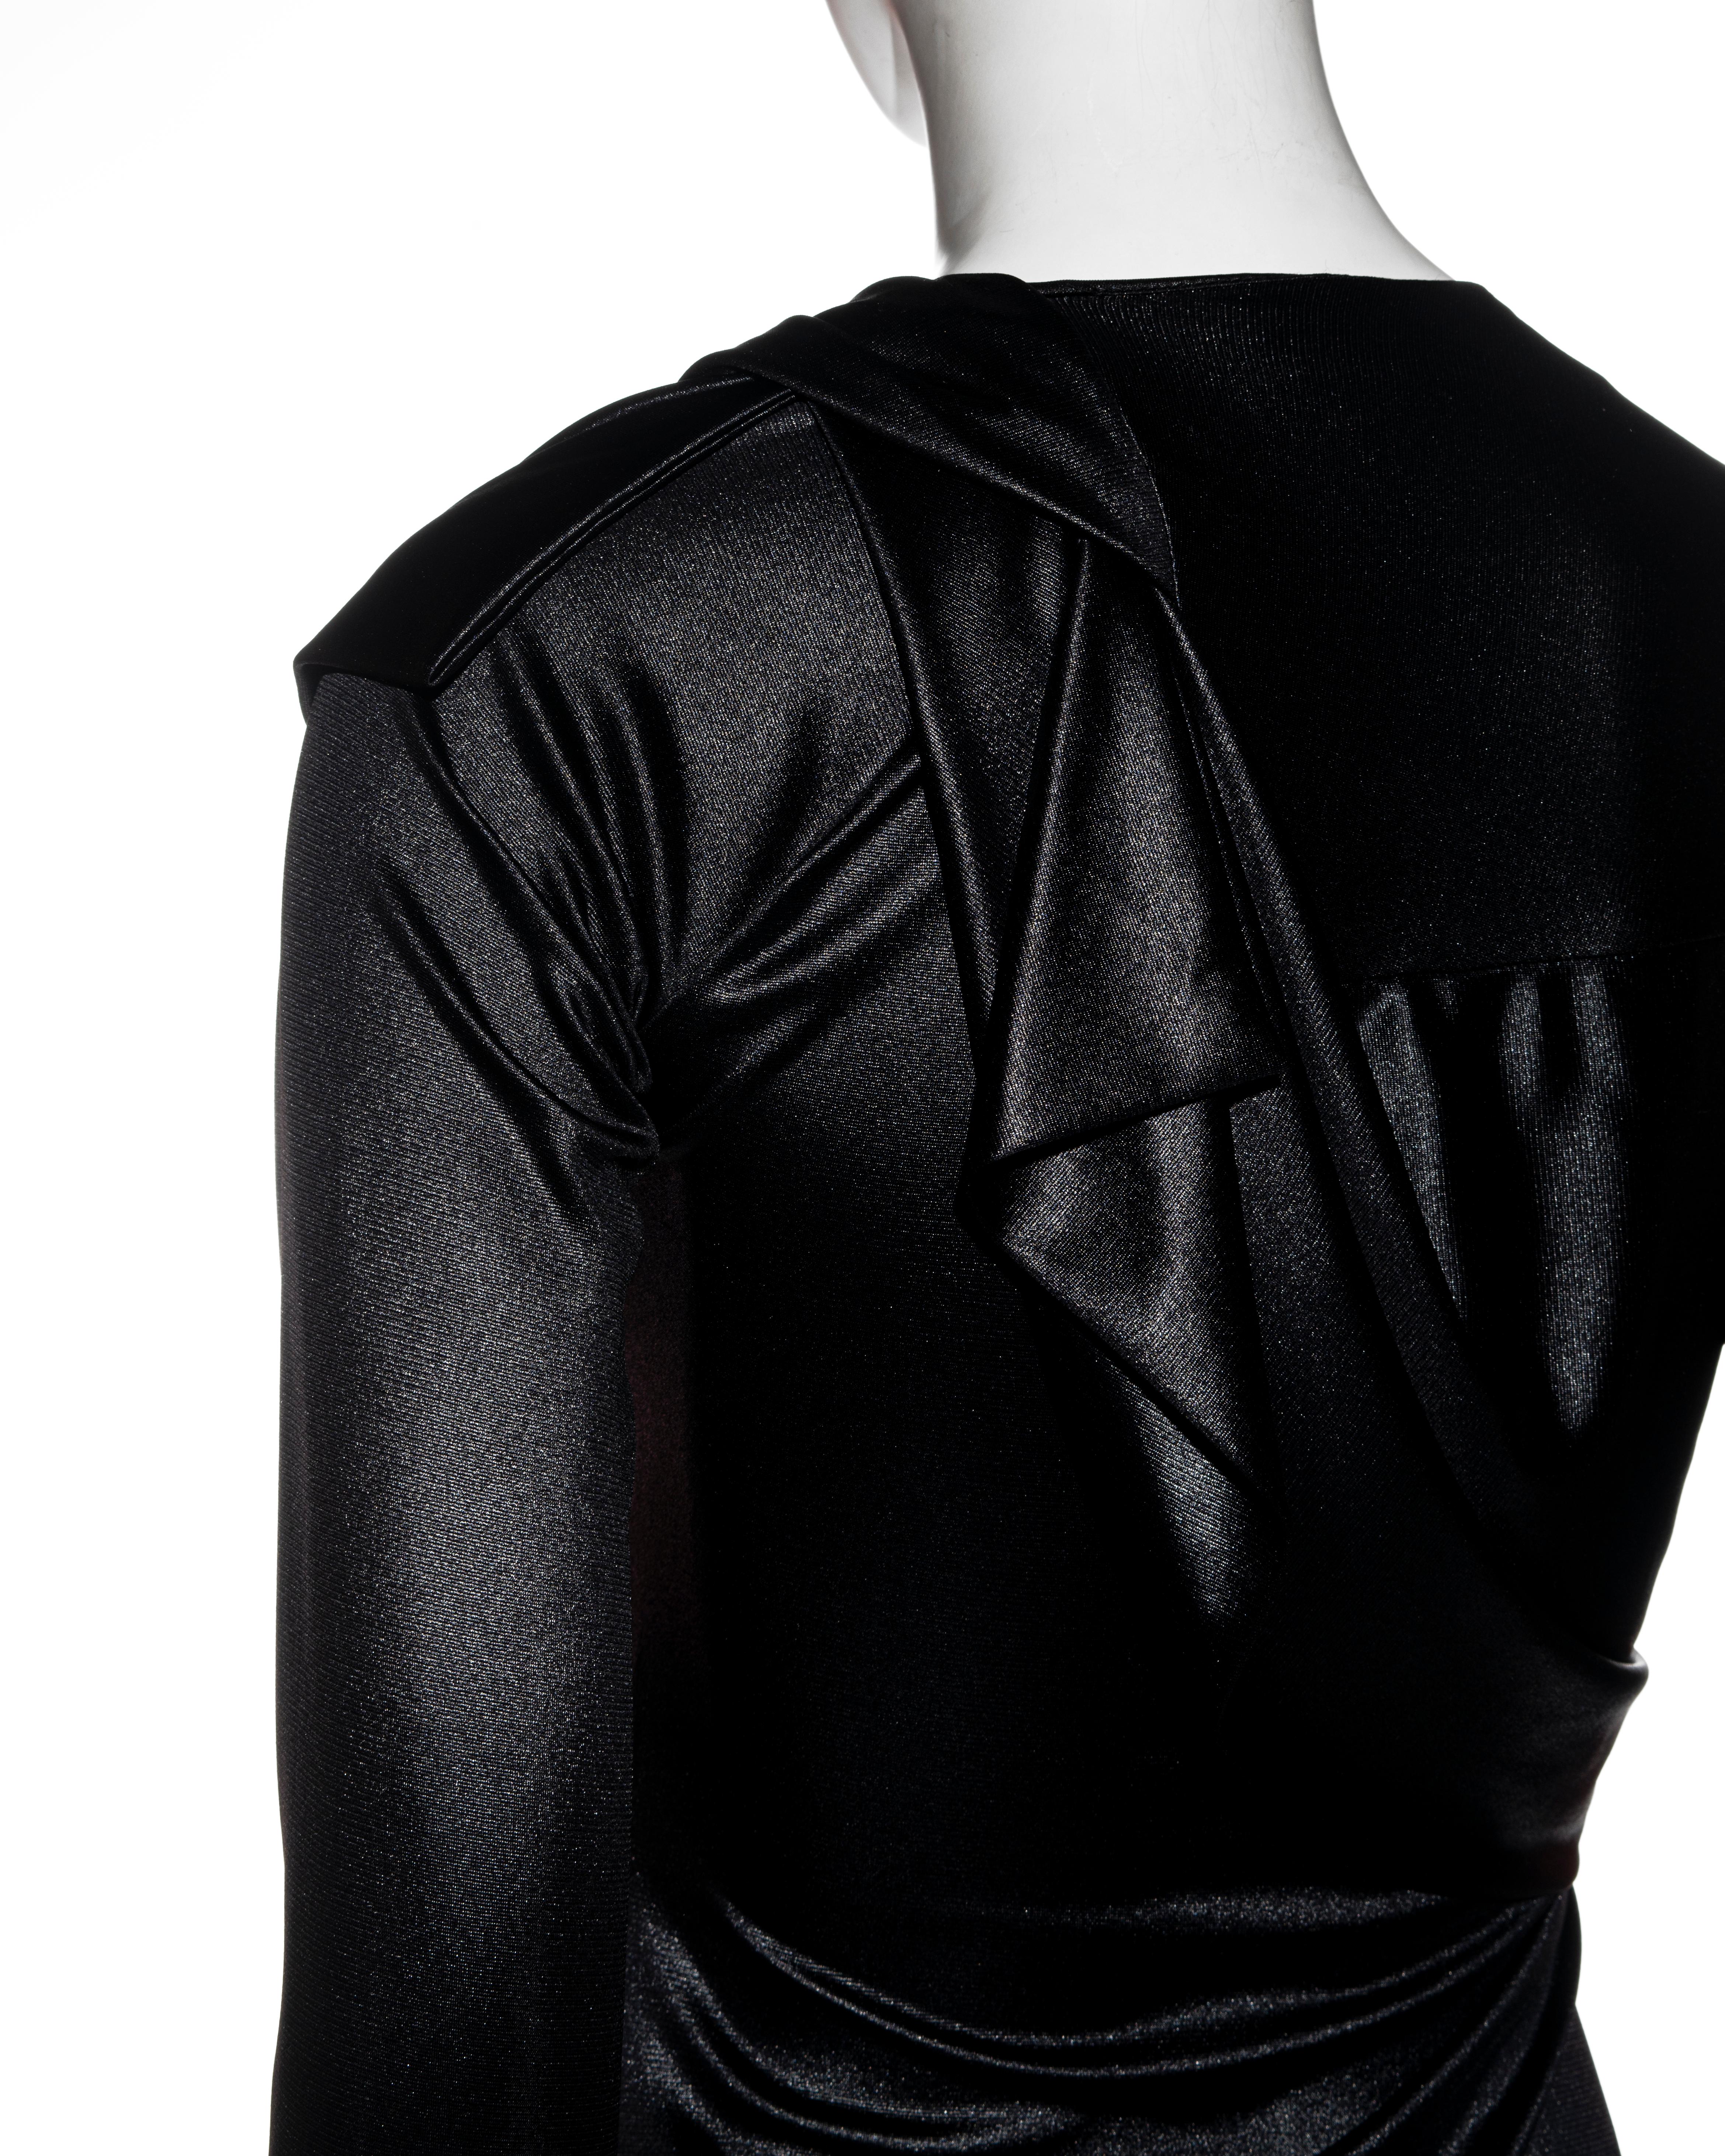 Vivienne Westwood metallic black nylon jersey draped evening dress, fw 1997 For Sale 2